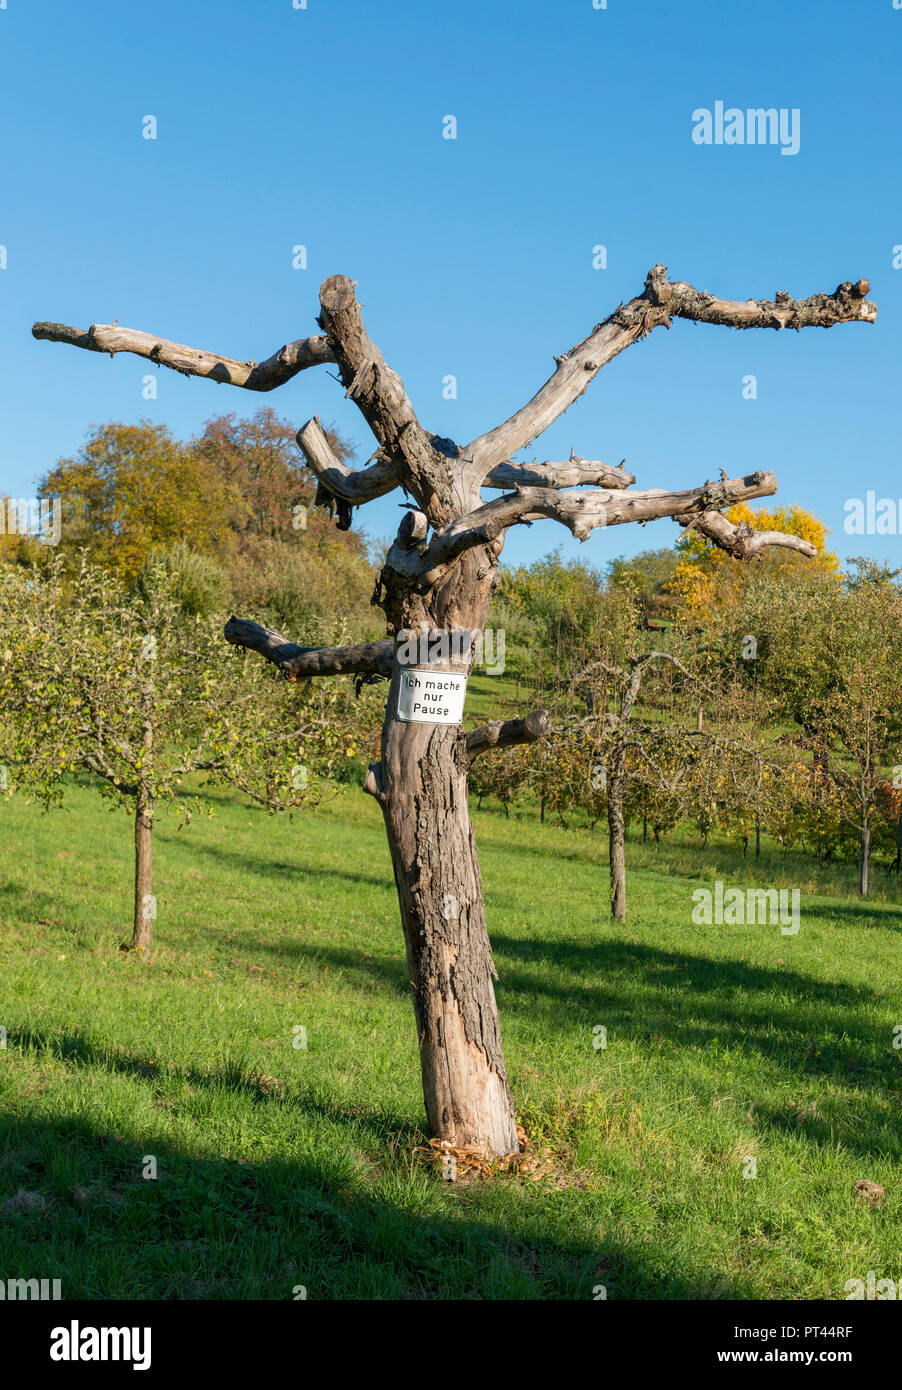 Germany, Baden-Württemberg, Kraichgau, dead tree, 'Ich mach nur Pause' sign (I'm taking a break), Stock Photo